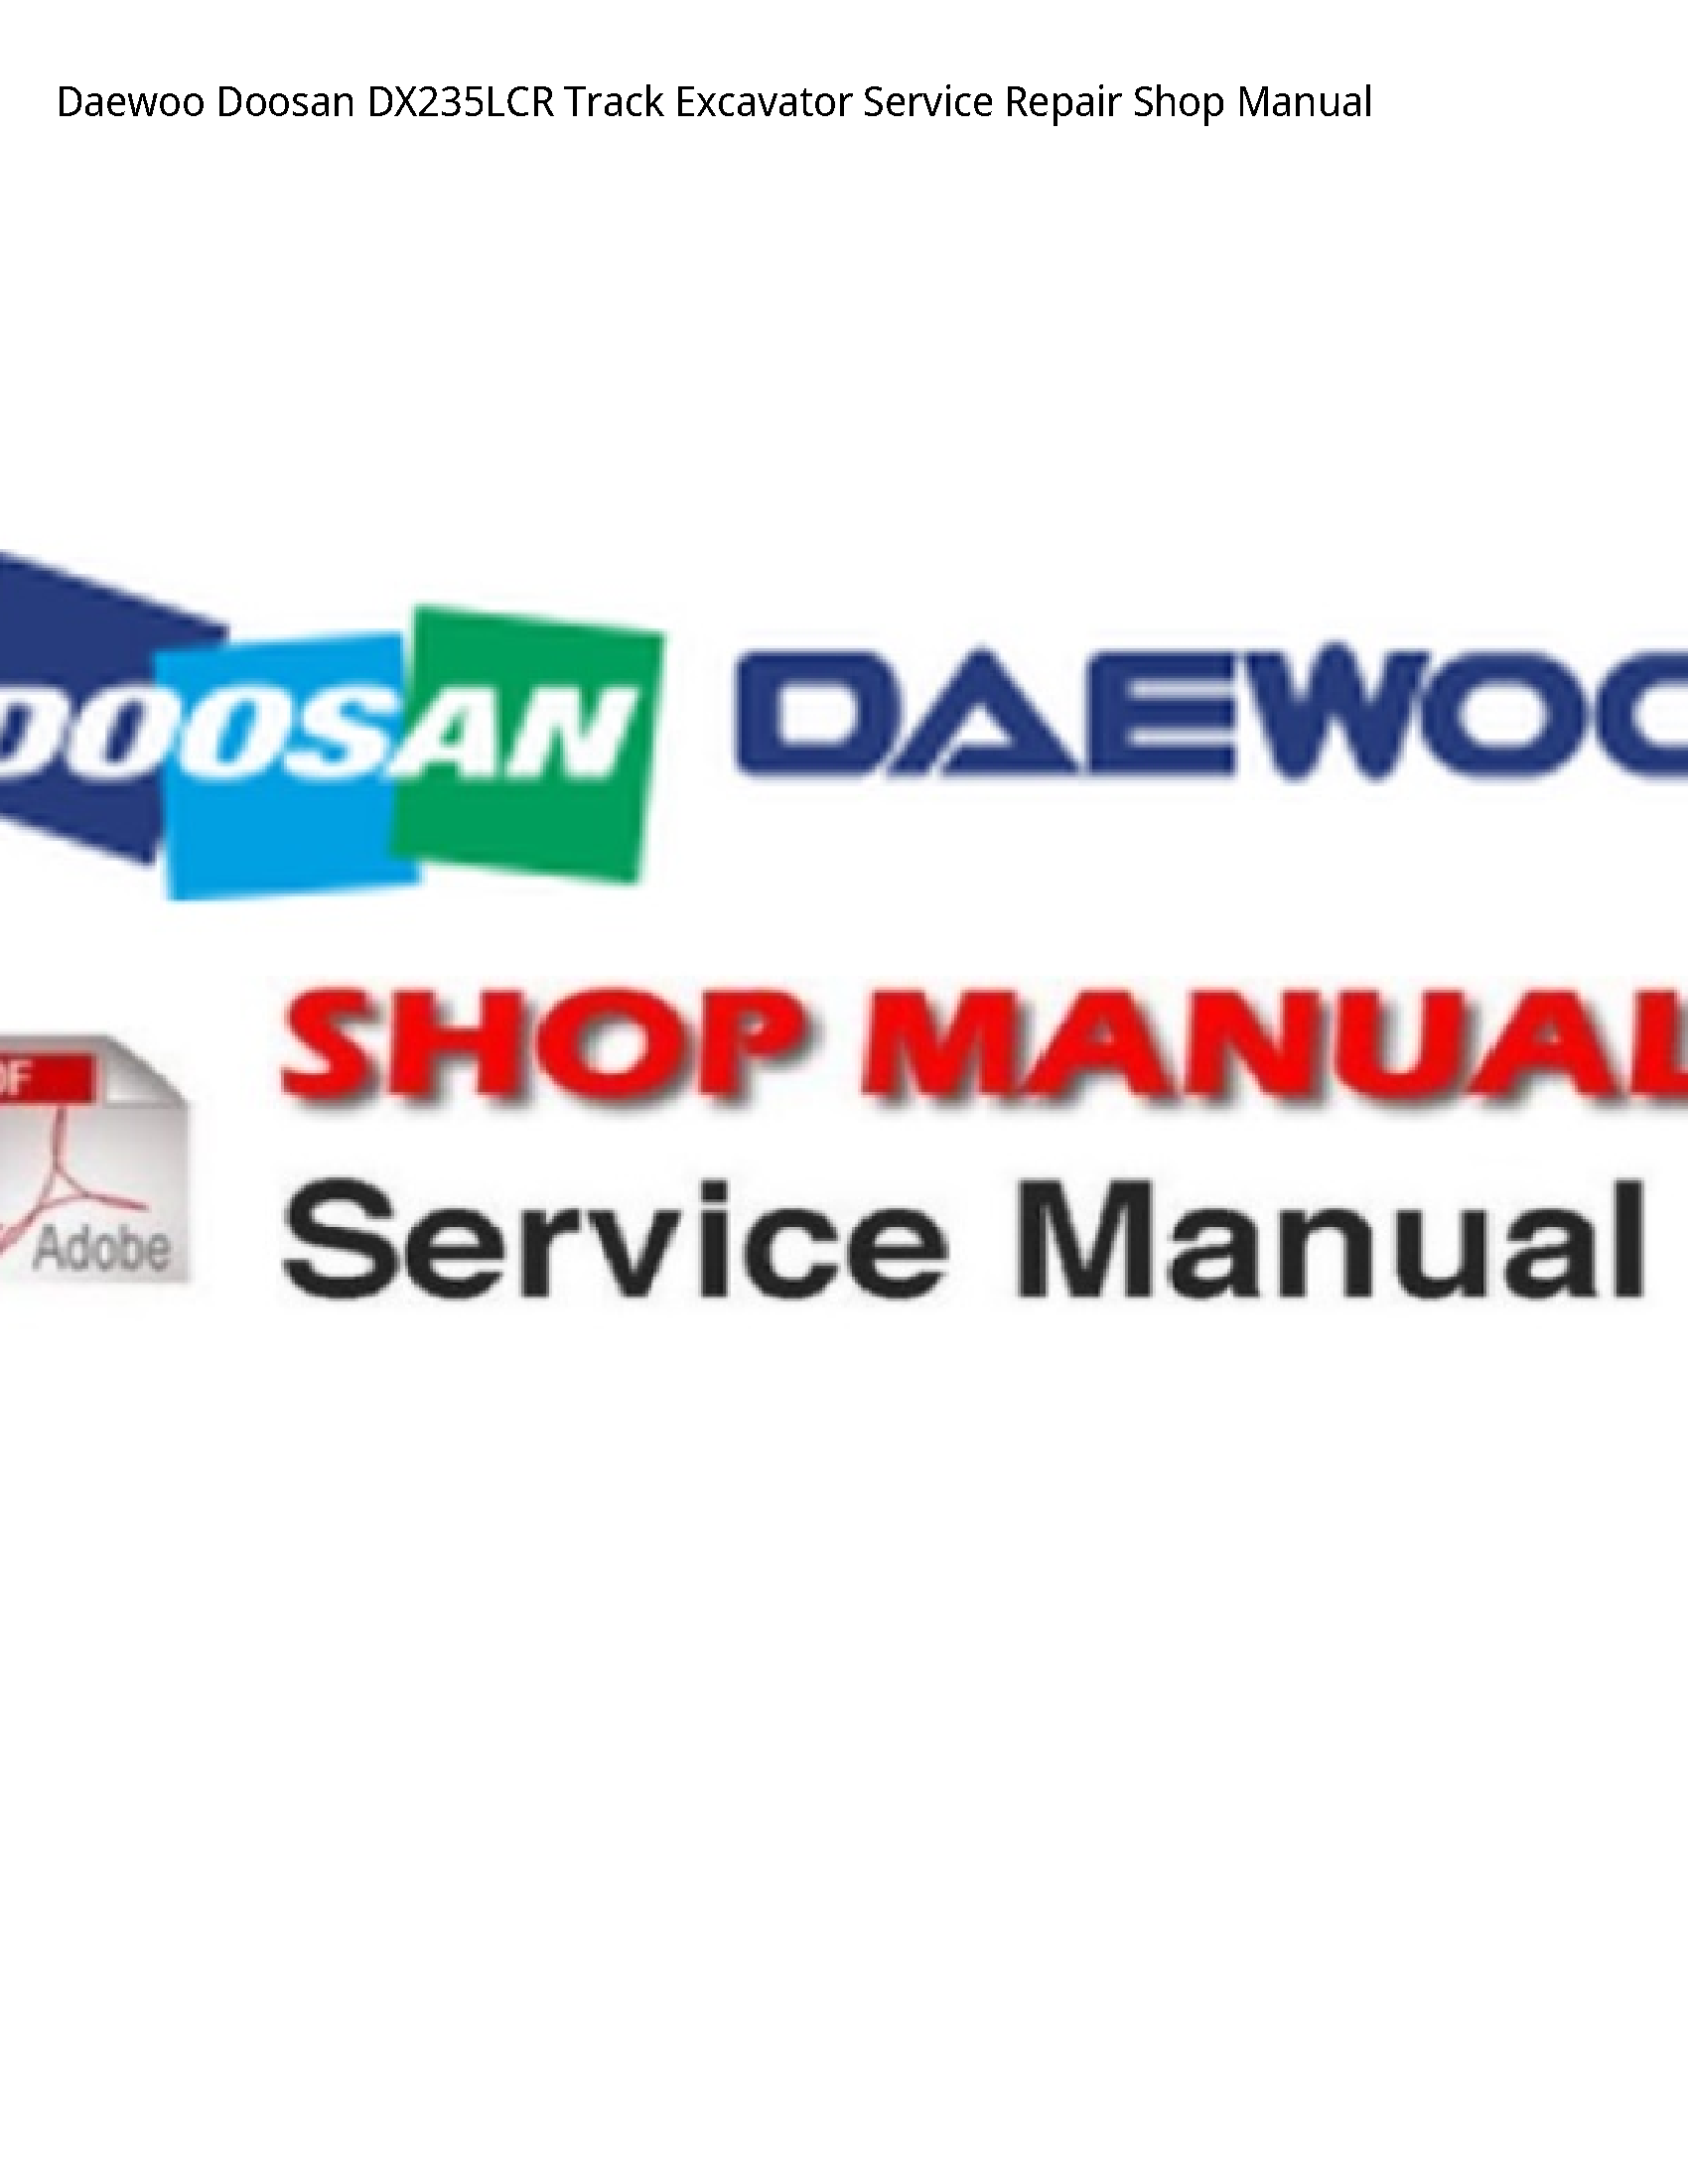 Daewoo Doosan DX235LCR Track Excavator manual